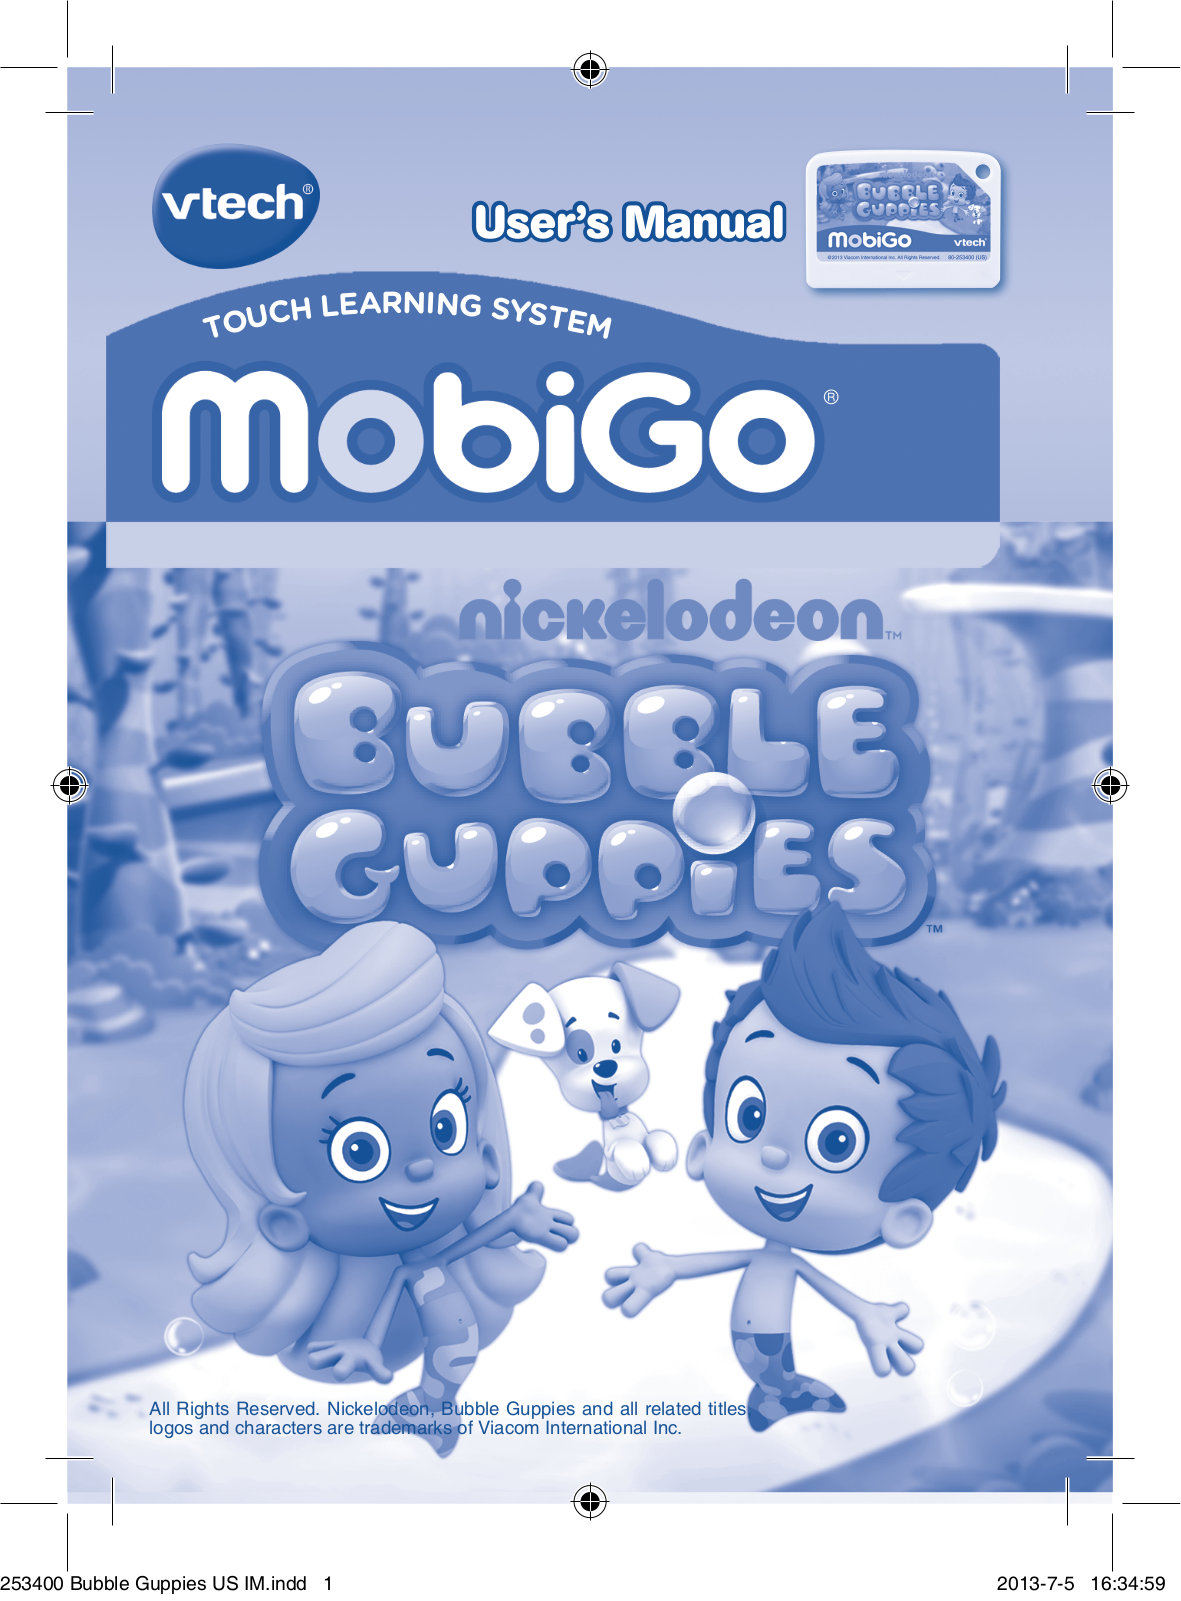 VTech MobiGo Bubble Guppies Owner's Manual